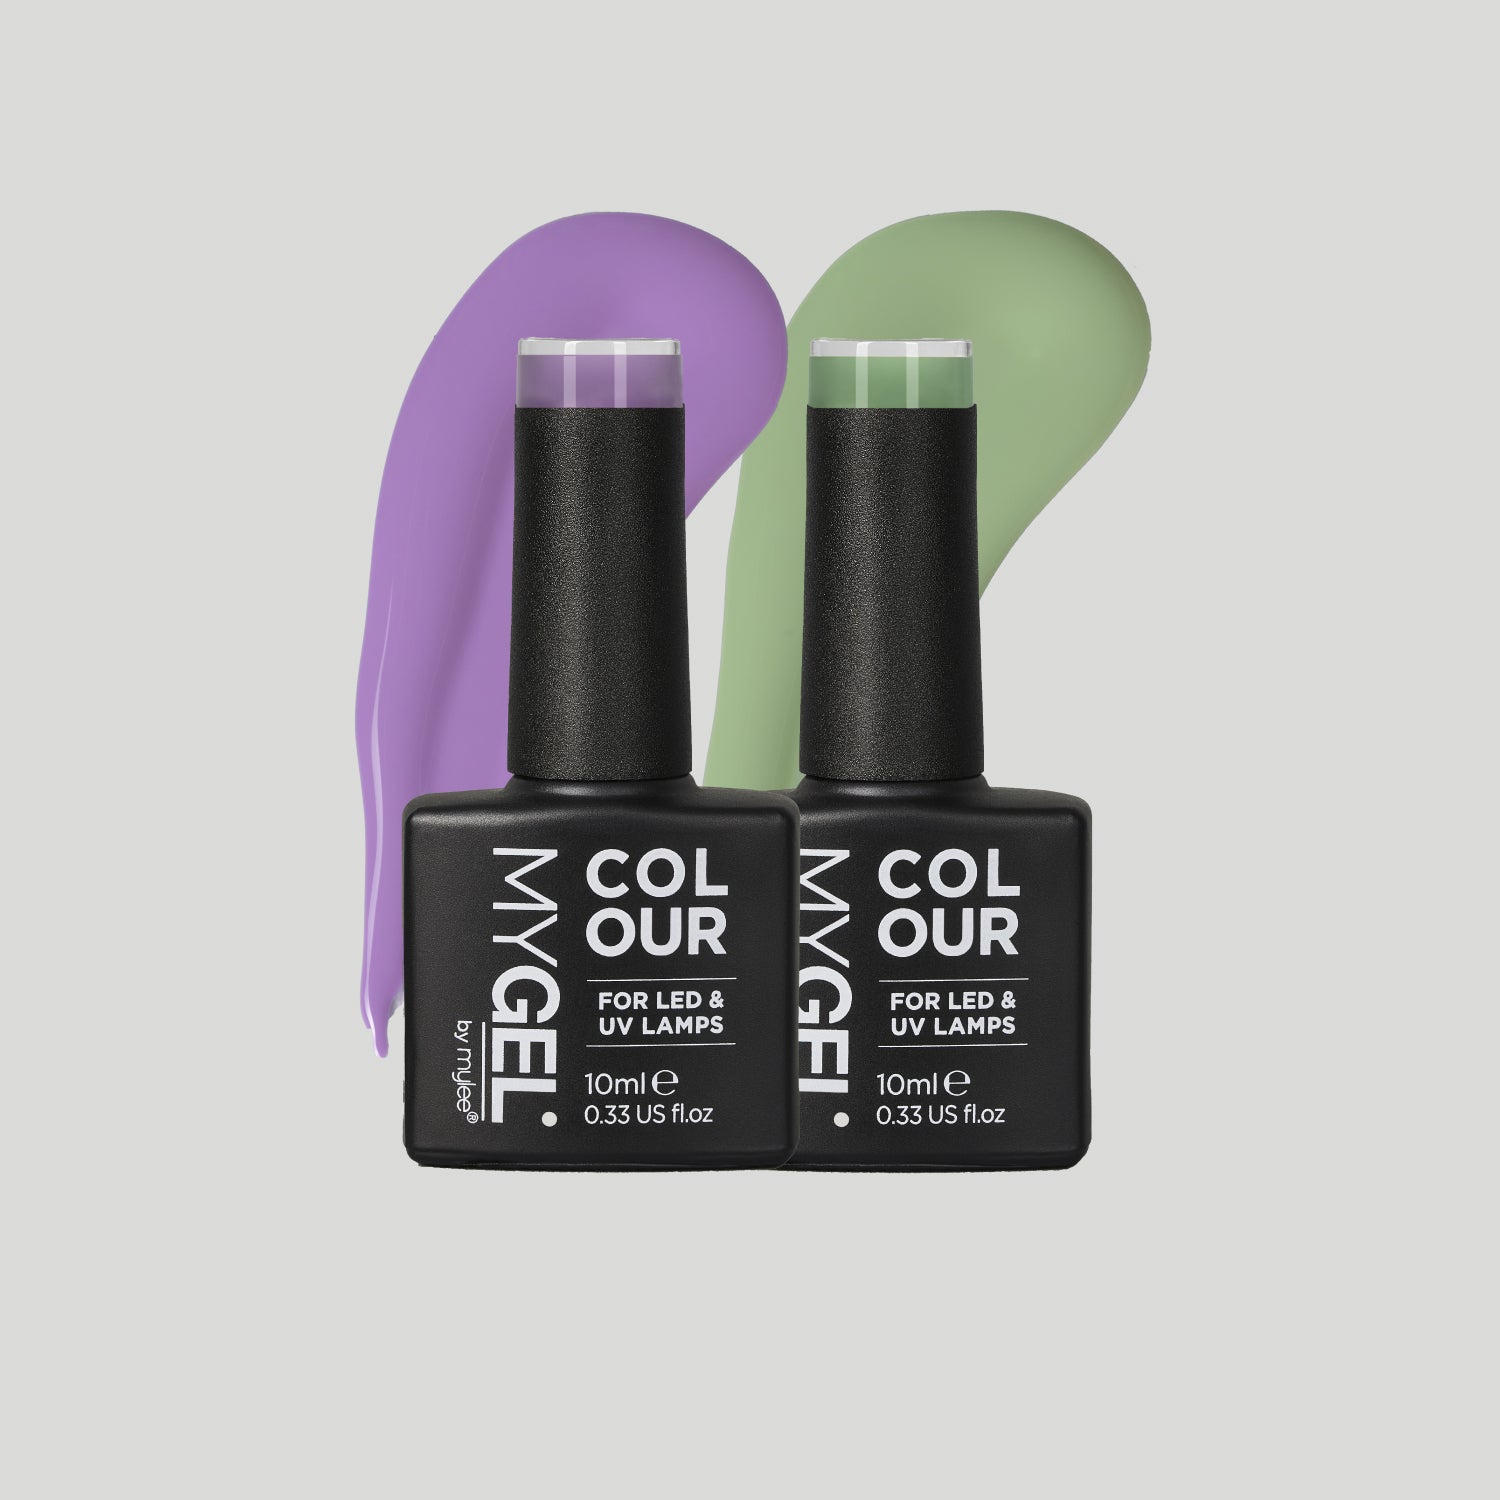 Image of Mylee Sage Advice LED/UV Gel Nail Polish Duo - 2x10ml – Long Lasting At Home Manicure/Pedicure, High Gloss And Chip Free Wear Nail Varnish